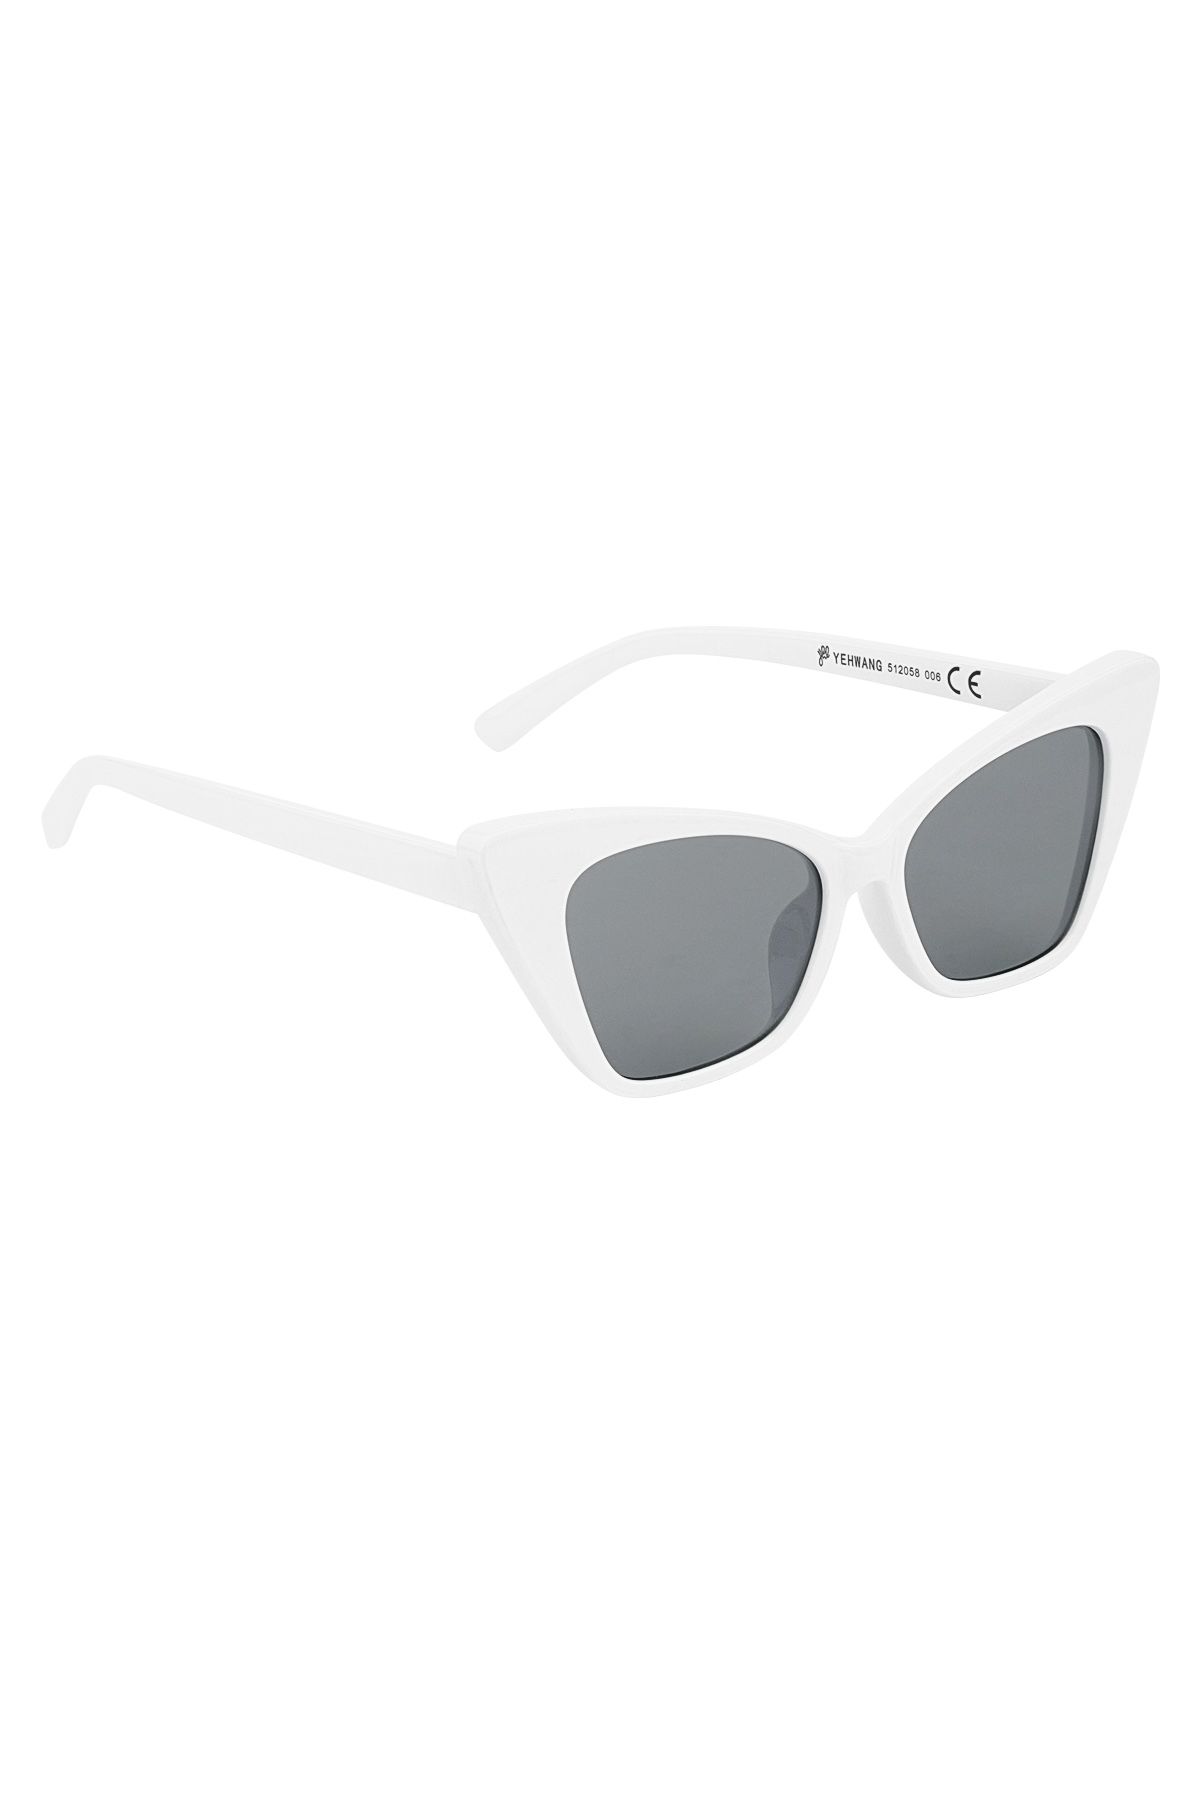 Sunglasses single color frame - white